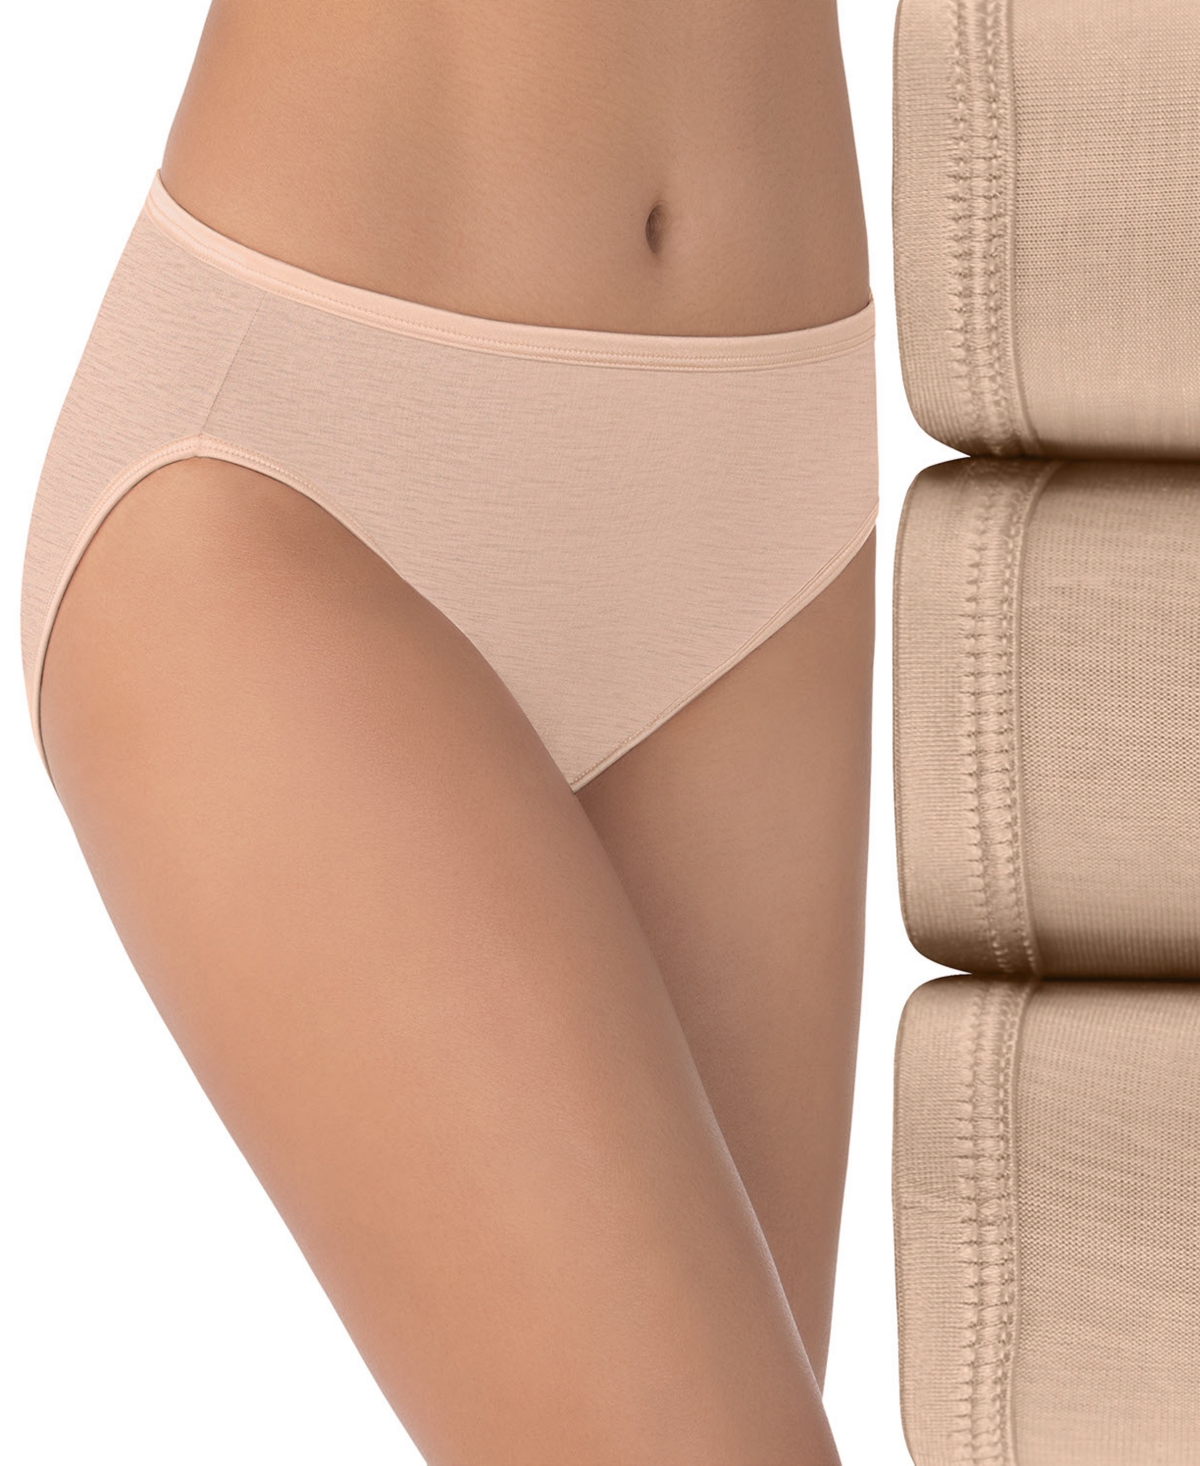 Women's 3-Pk. Vanity Fair Illumination Hi-Cut Brief Underwear 13307 - Rbg Multi (Nude )